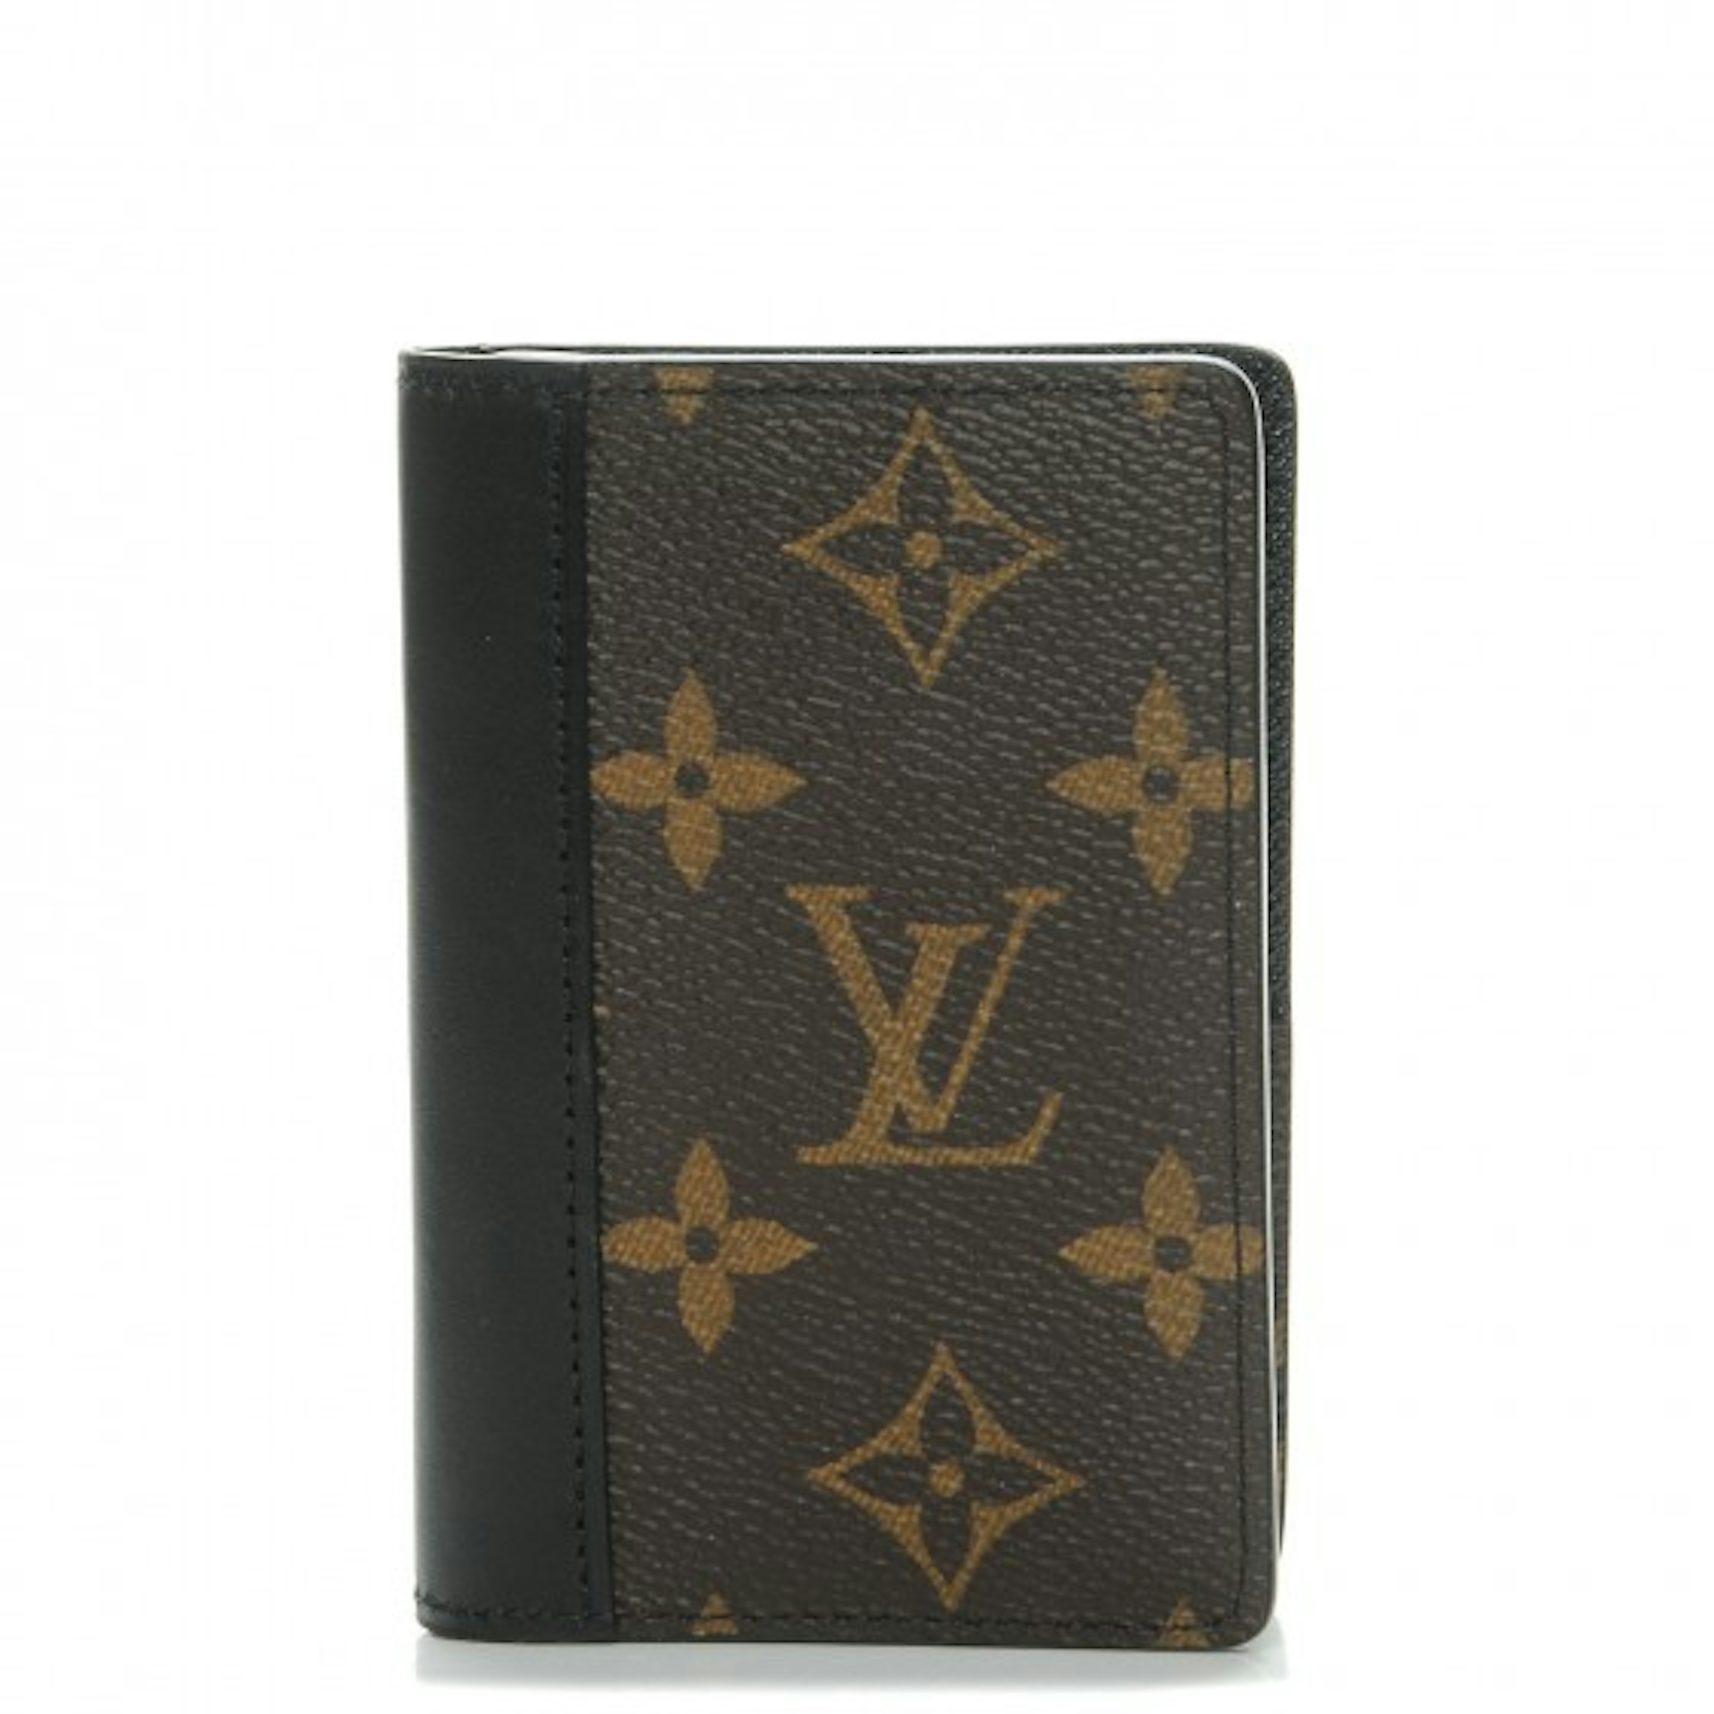 Louis-Vuitton-Monogram-Macassar-Portefeuille-Compact-M60167